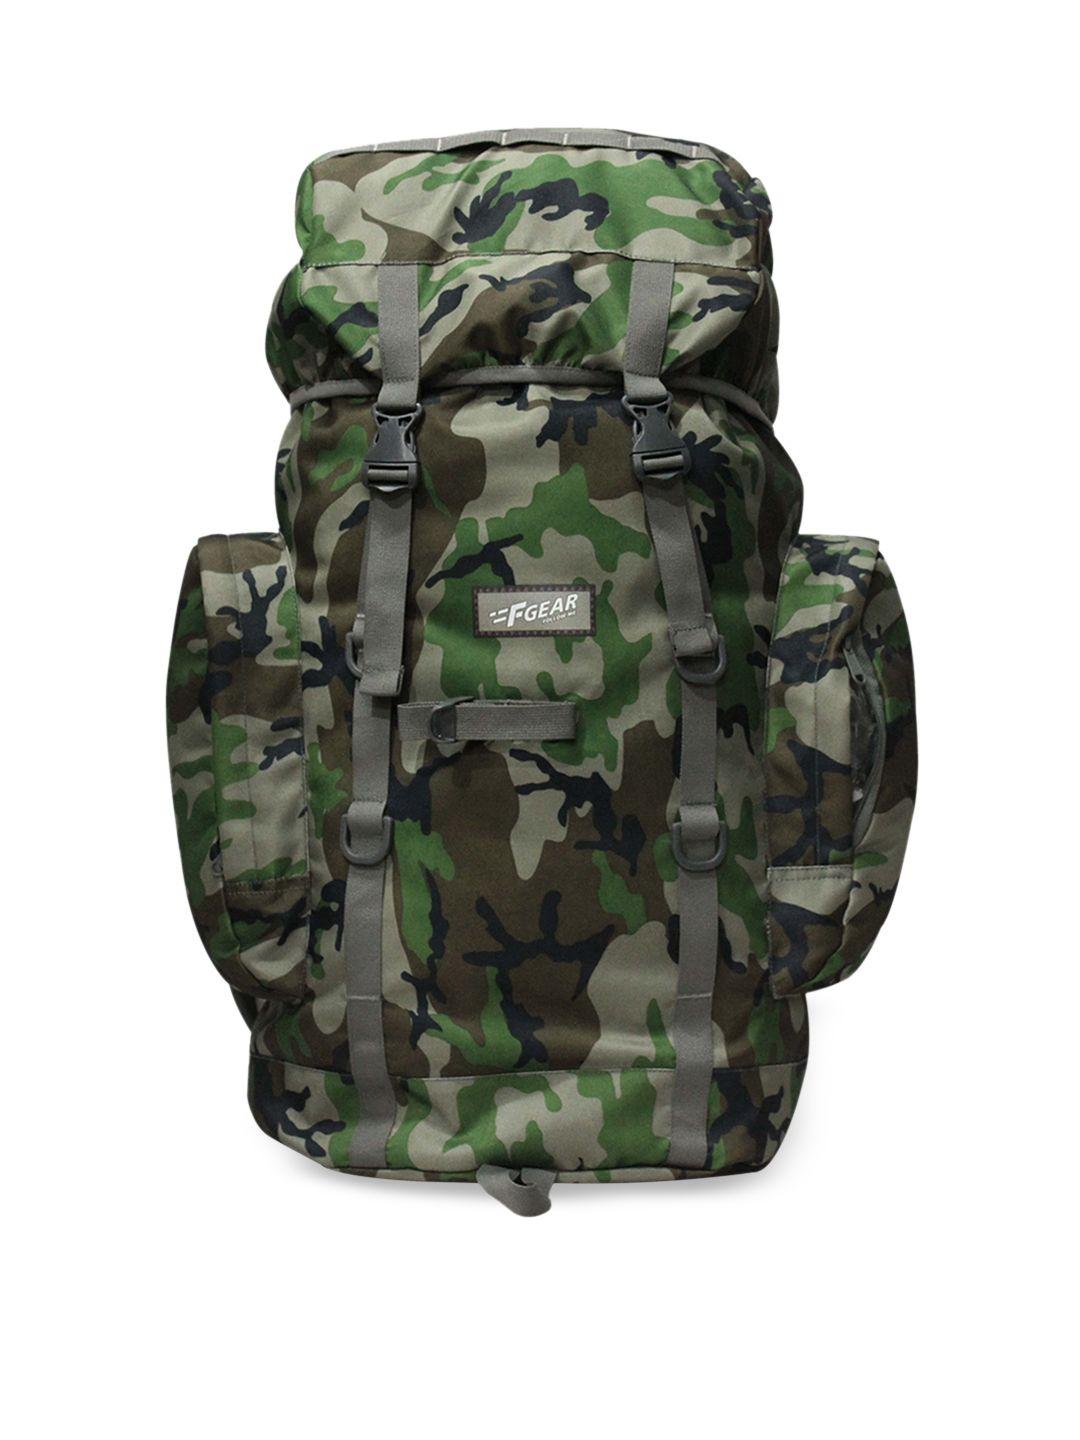 f gear unisex green & brown printed large 46-litre rucksack